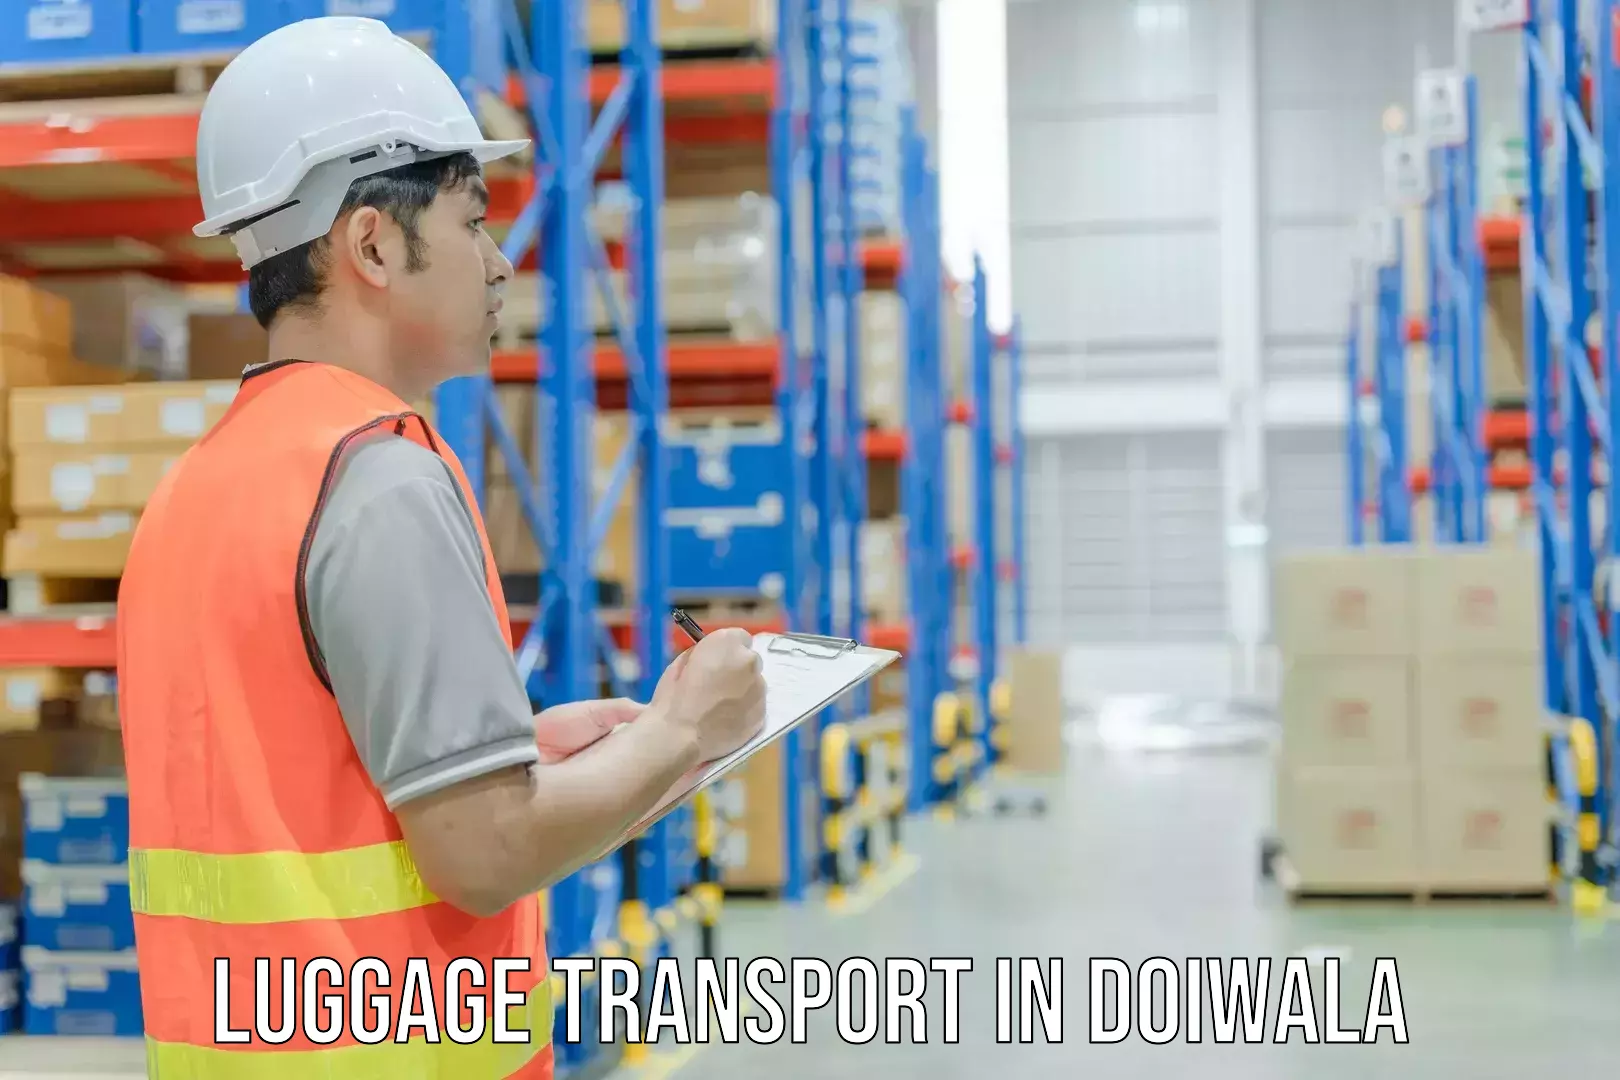 Luggage transport consultancy in Doiwala